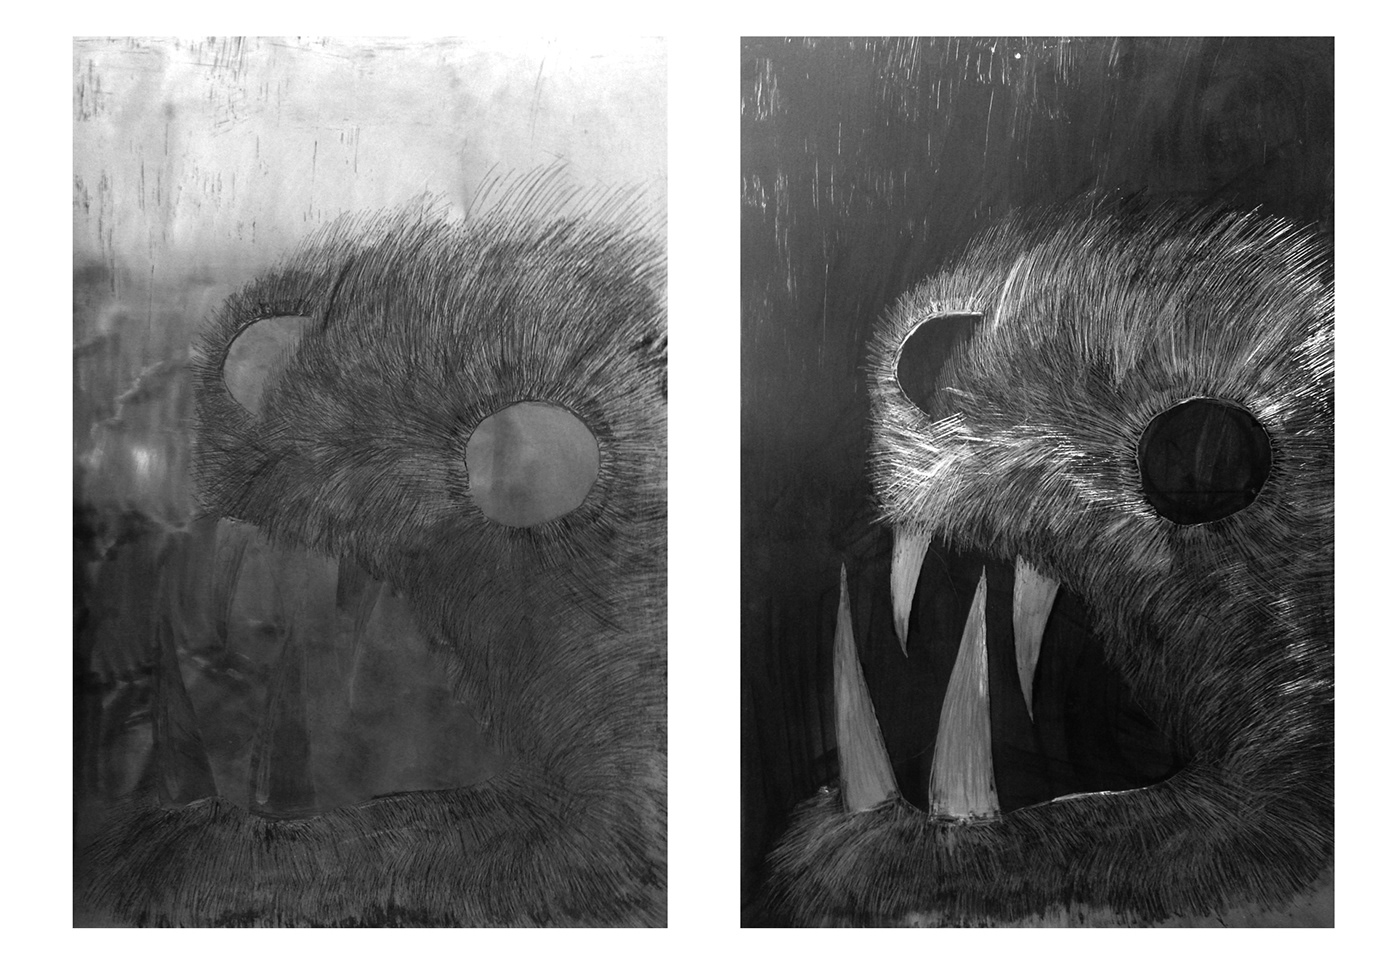 acquaforte big black face handmade monster mythology oldschool portrait traditional graphics